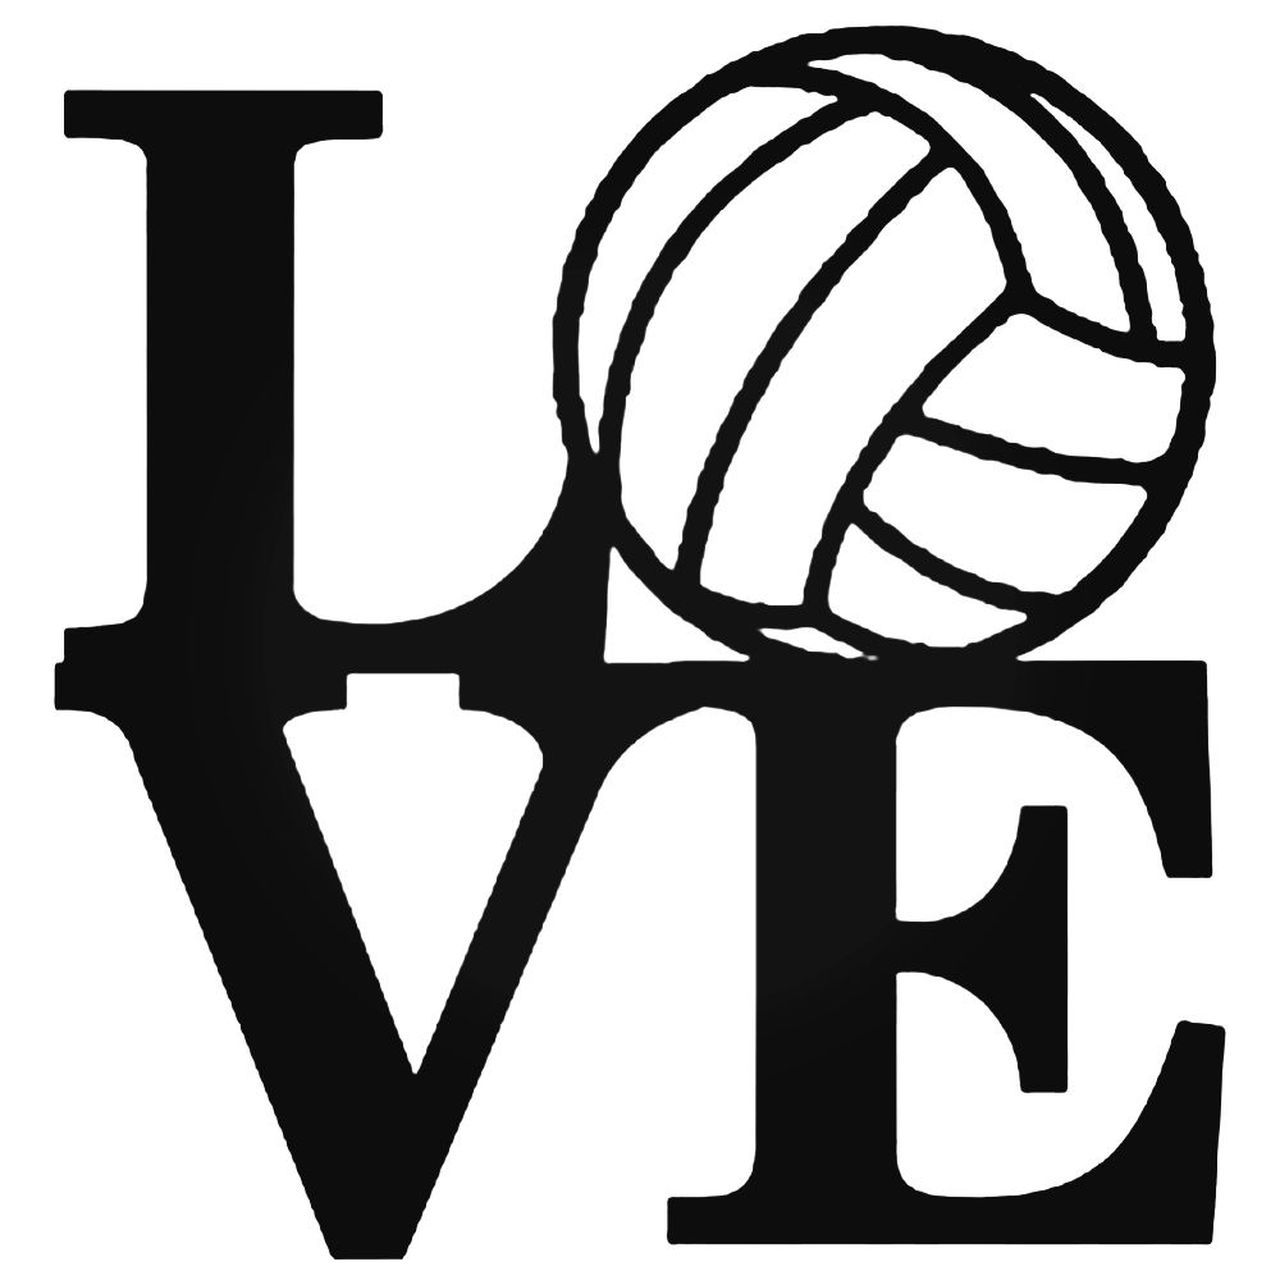 Volleyball Love 005 Decal Sticker.